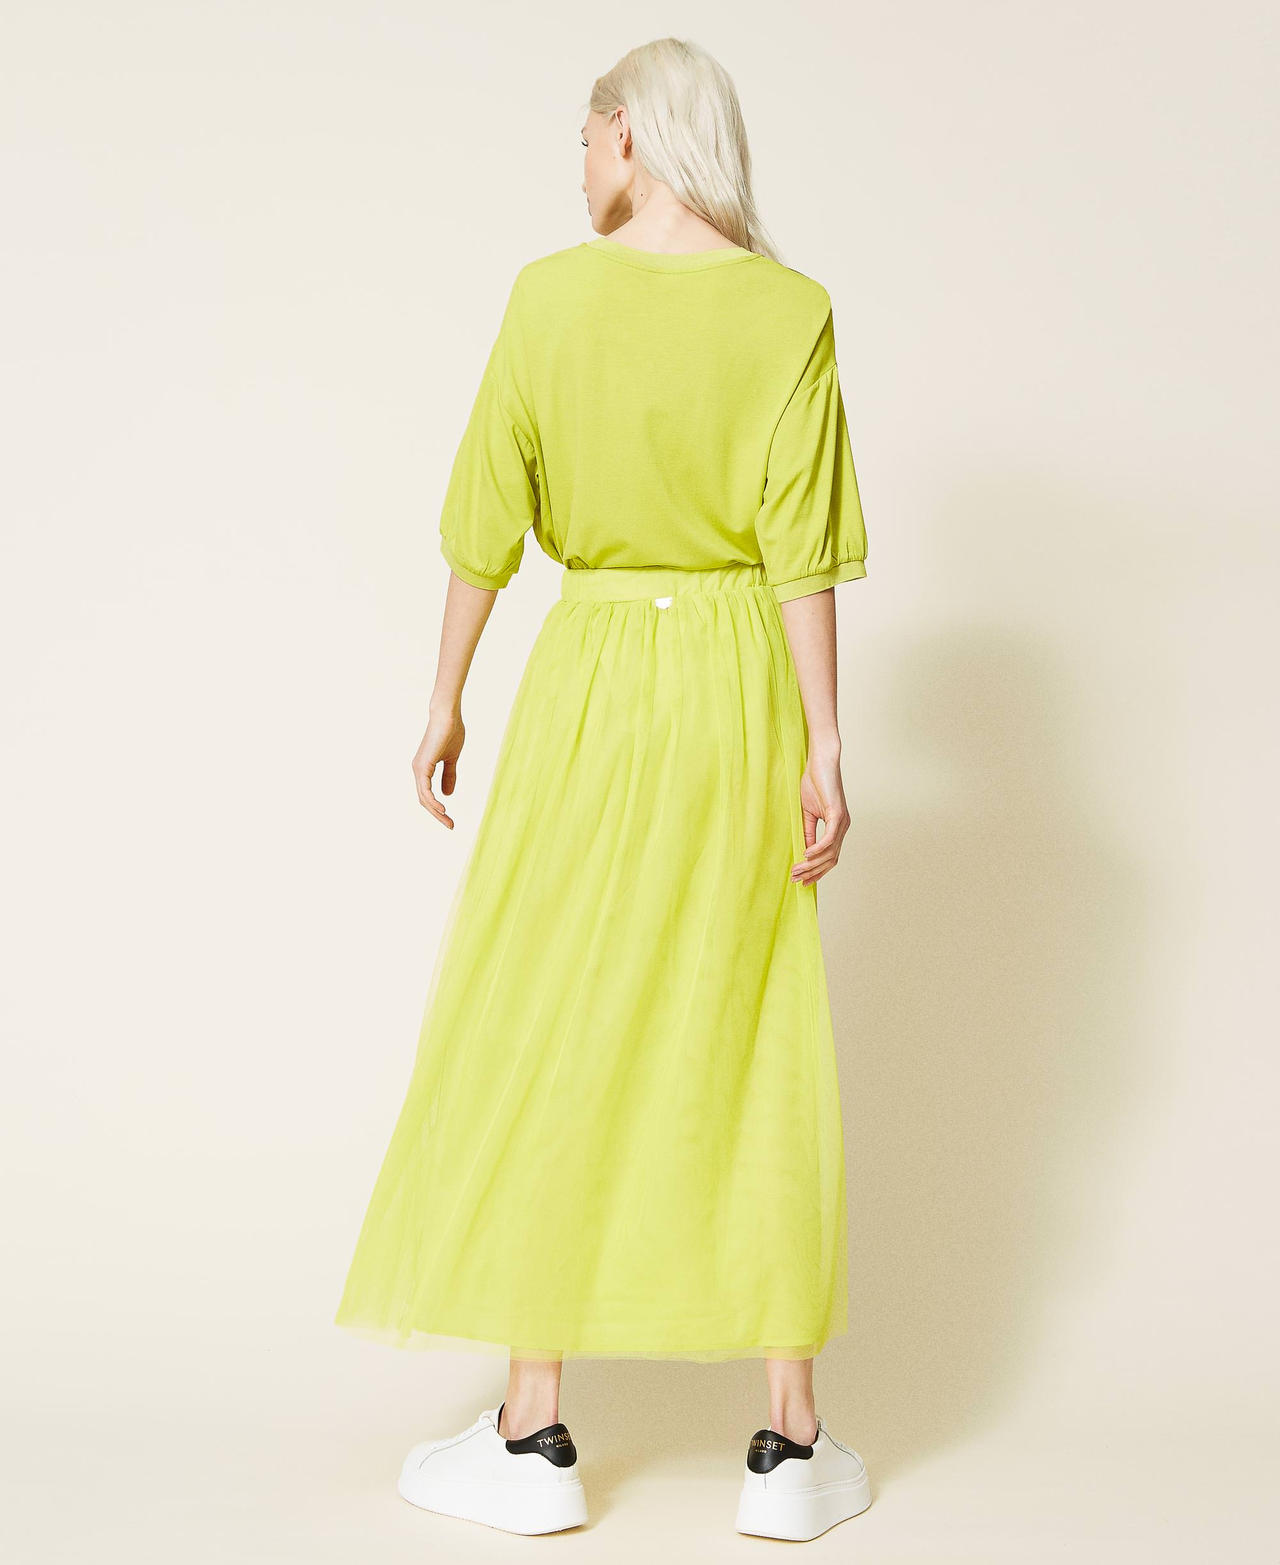 Jupe longue en tulle plissé Vert « Green Oasis » Femme 221LL28XX-03